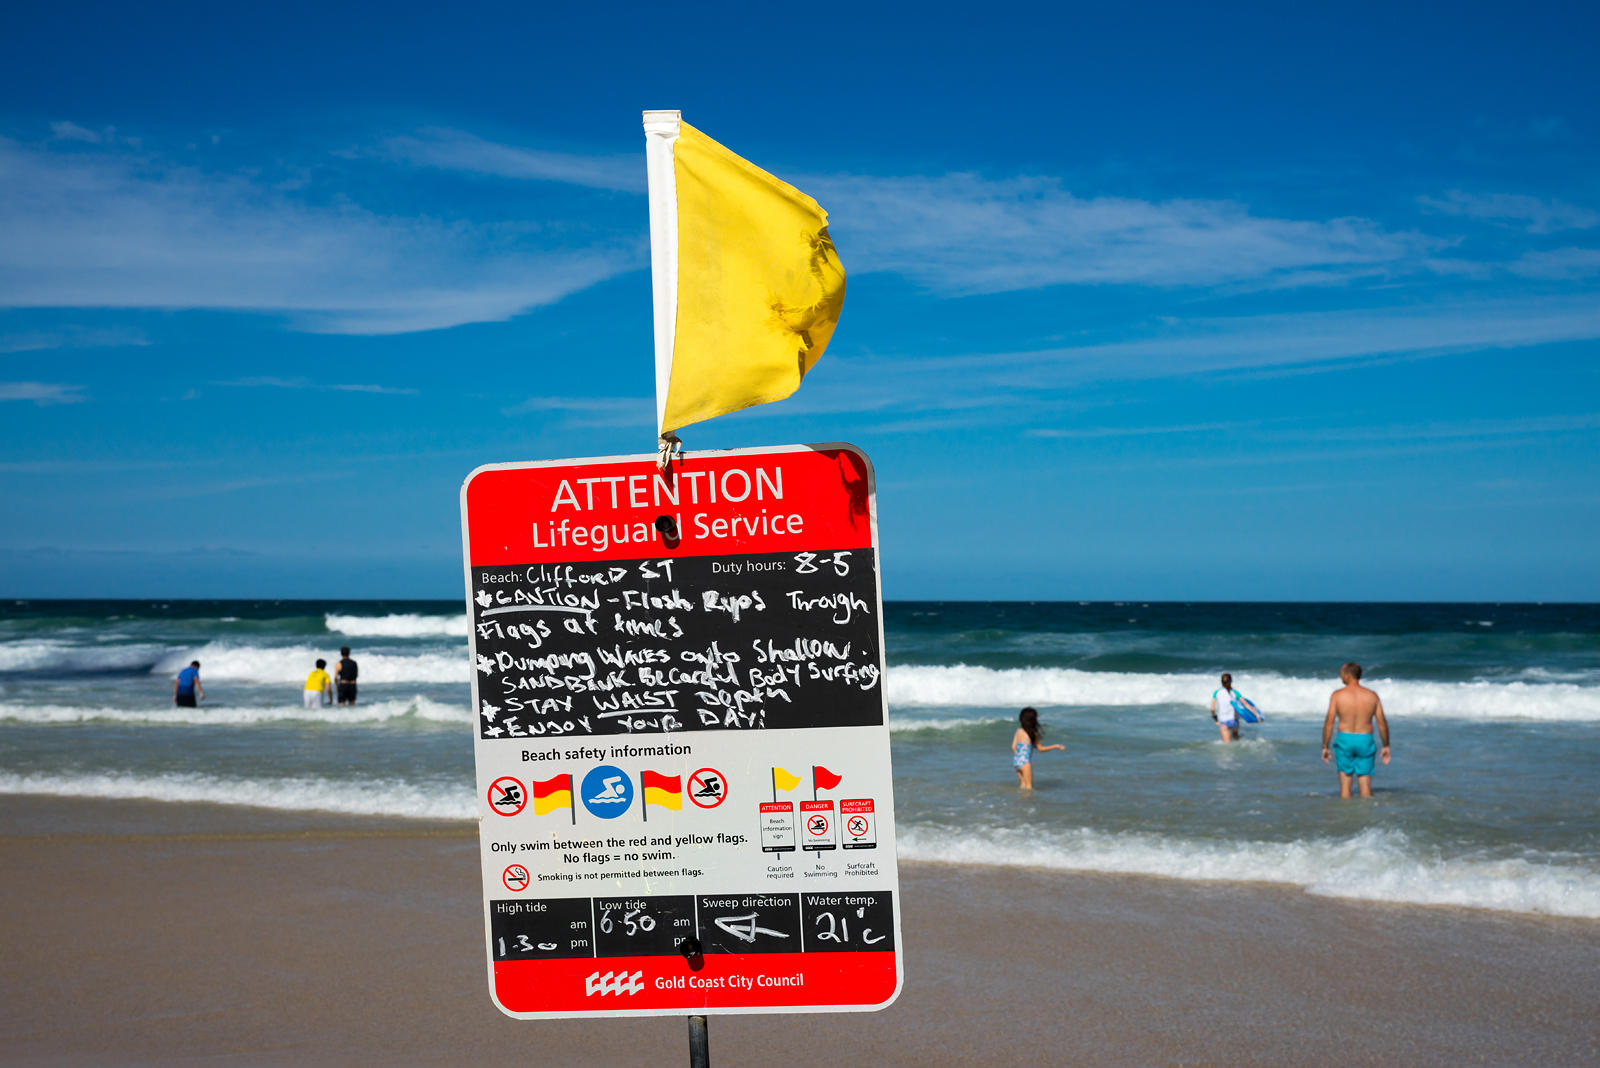 Life guard notice at Surfers paradise, Gold Coast.